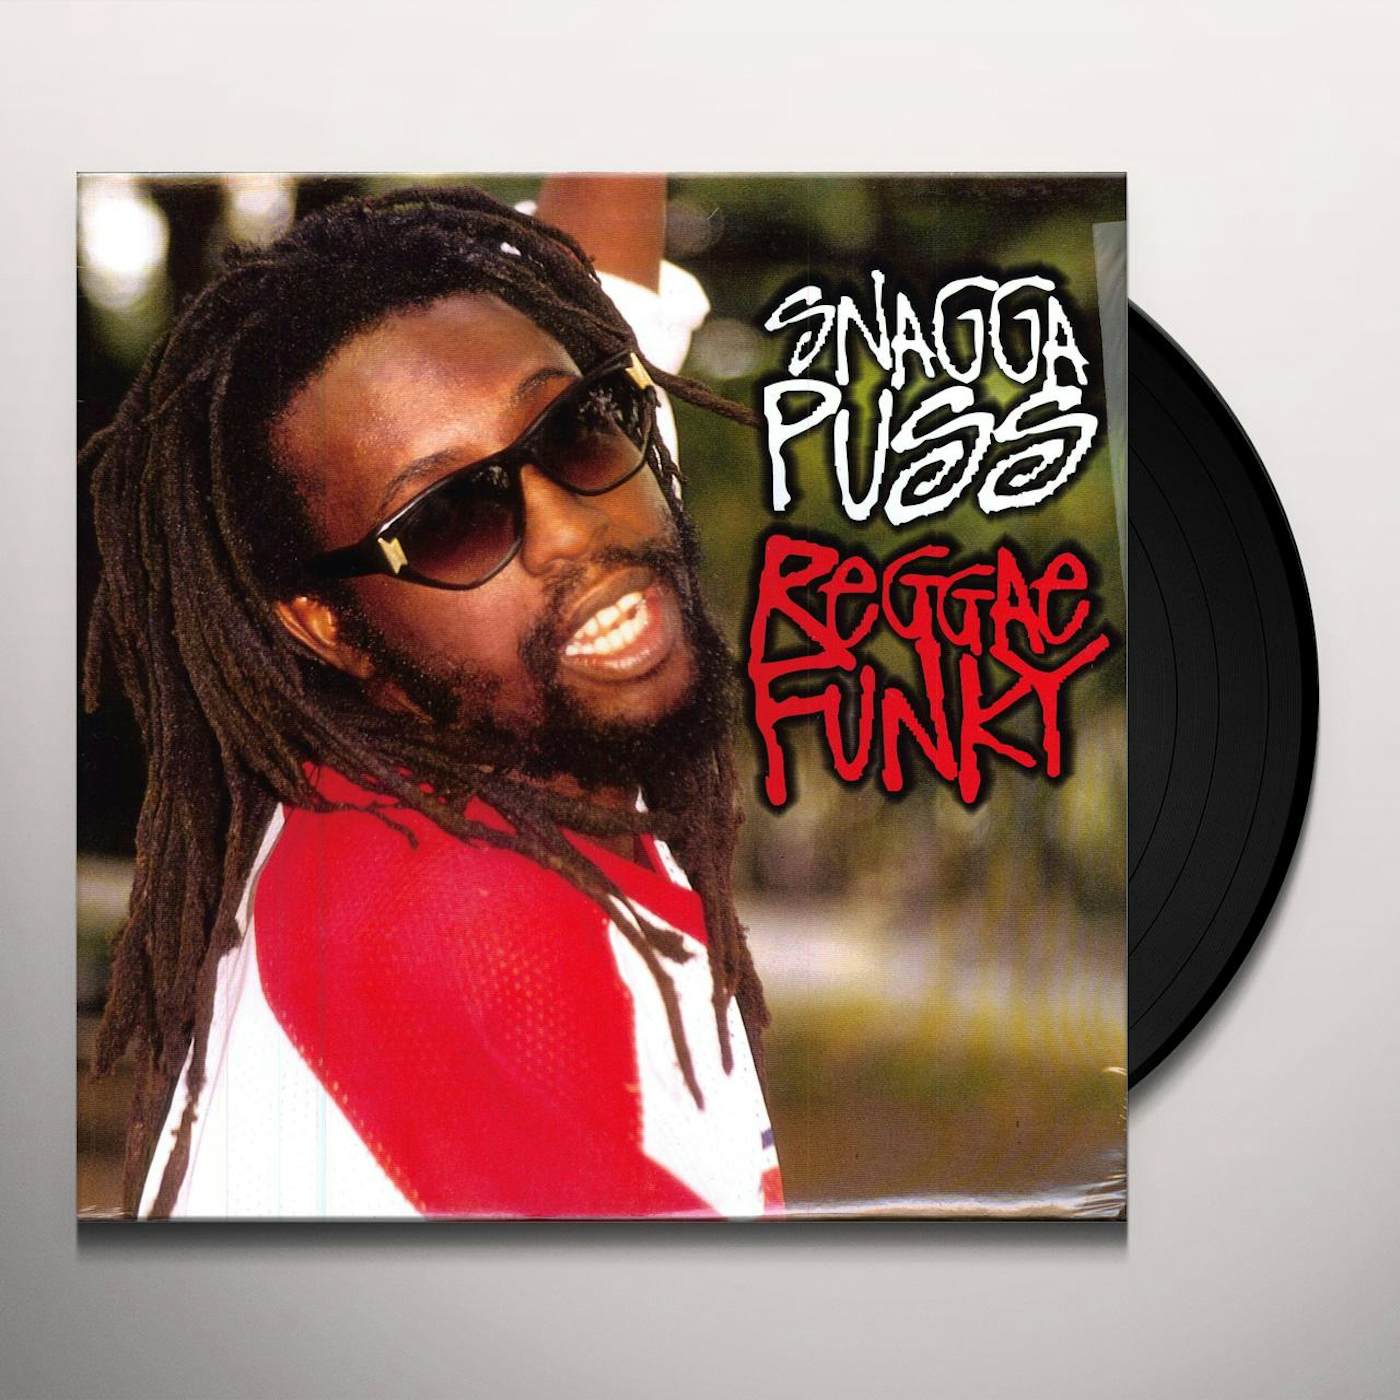 Snagga Puss Reggae Funky Vinyl Record